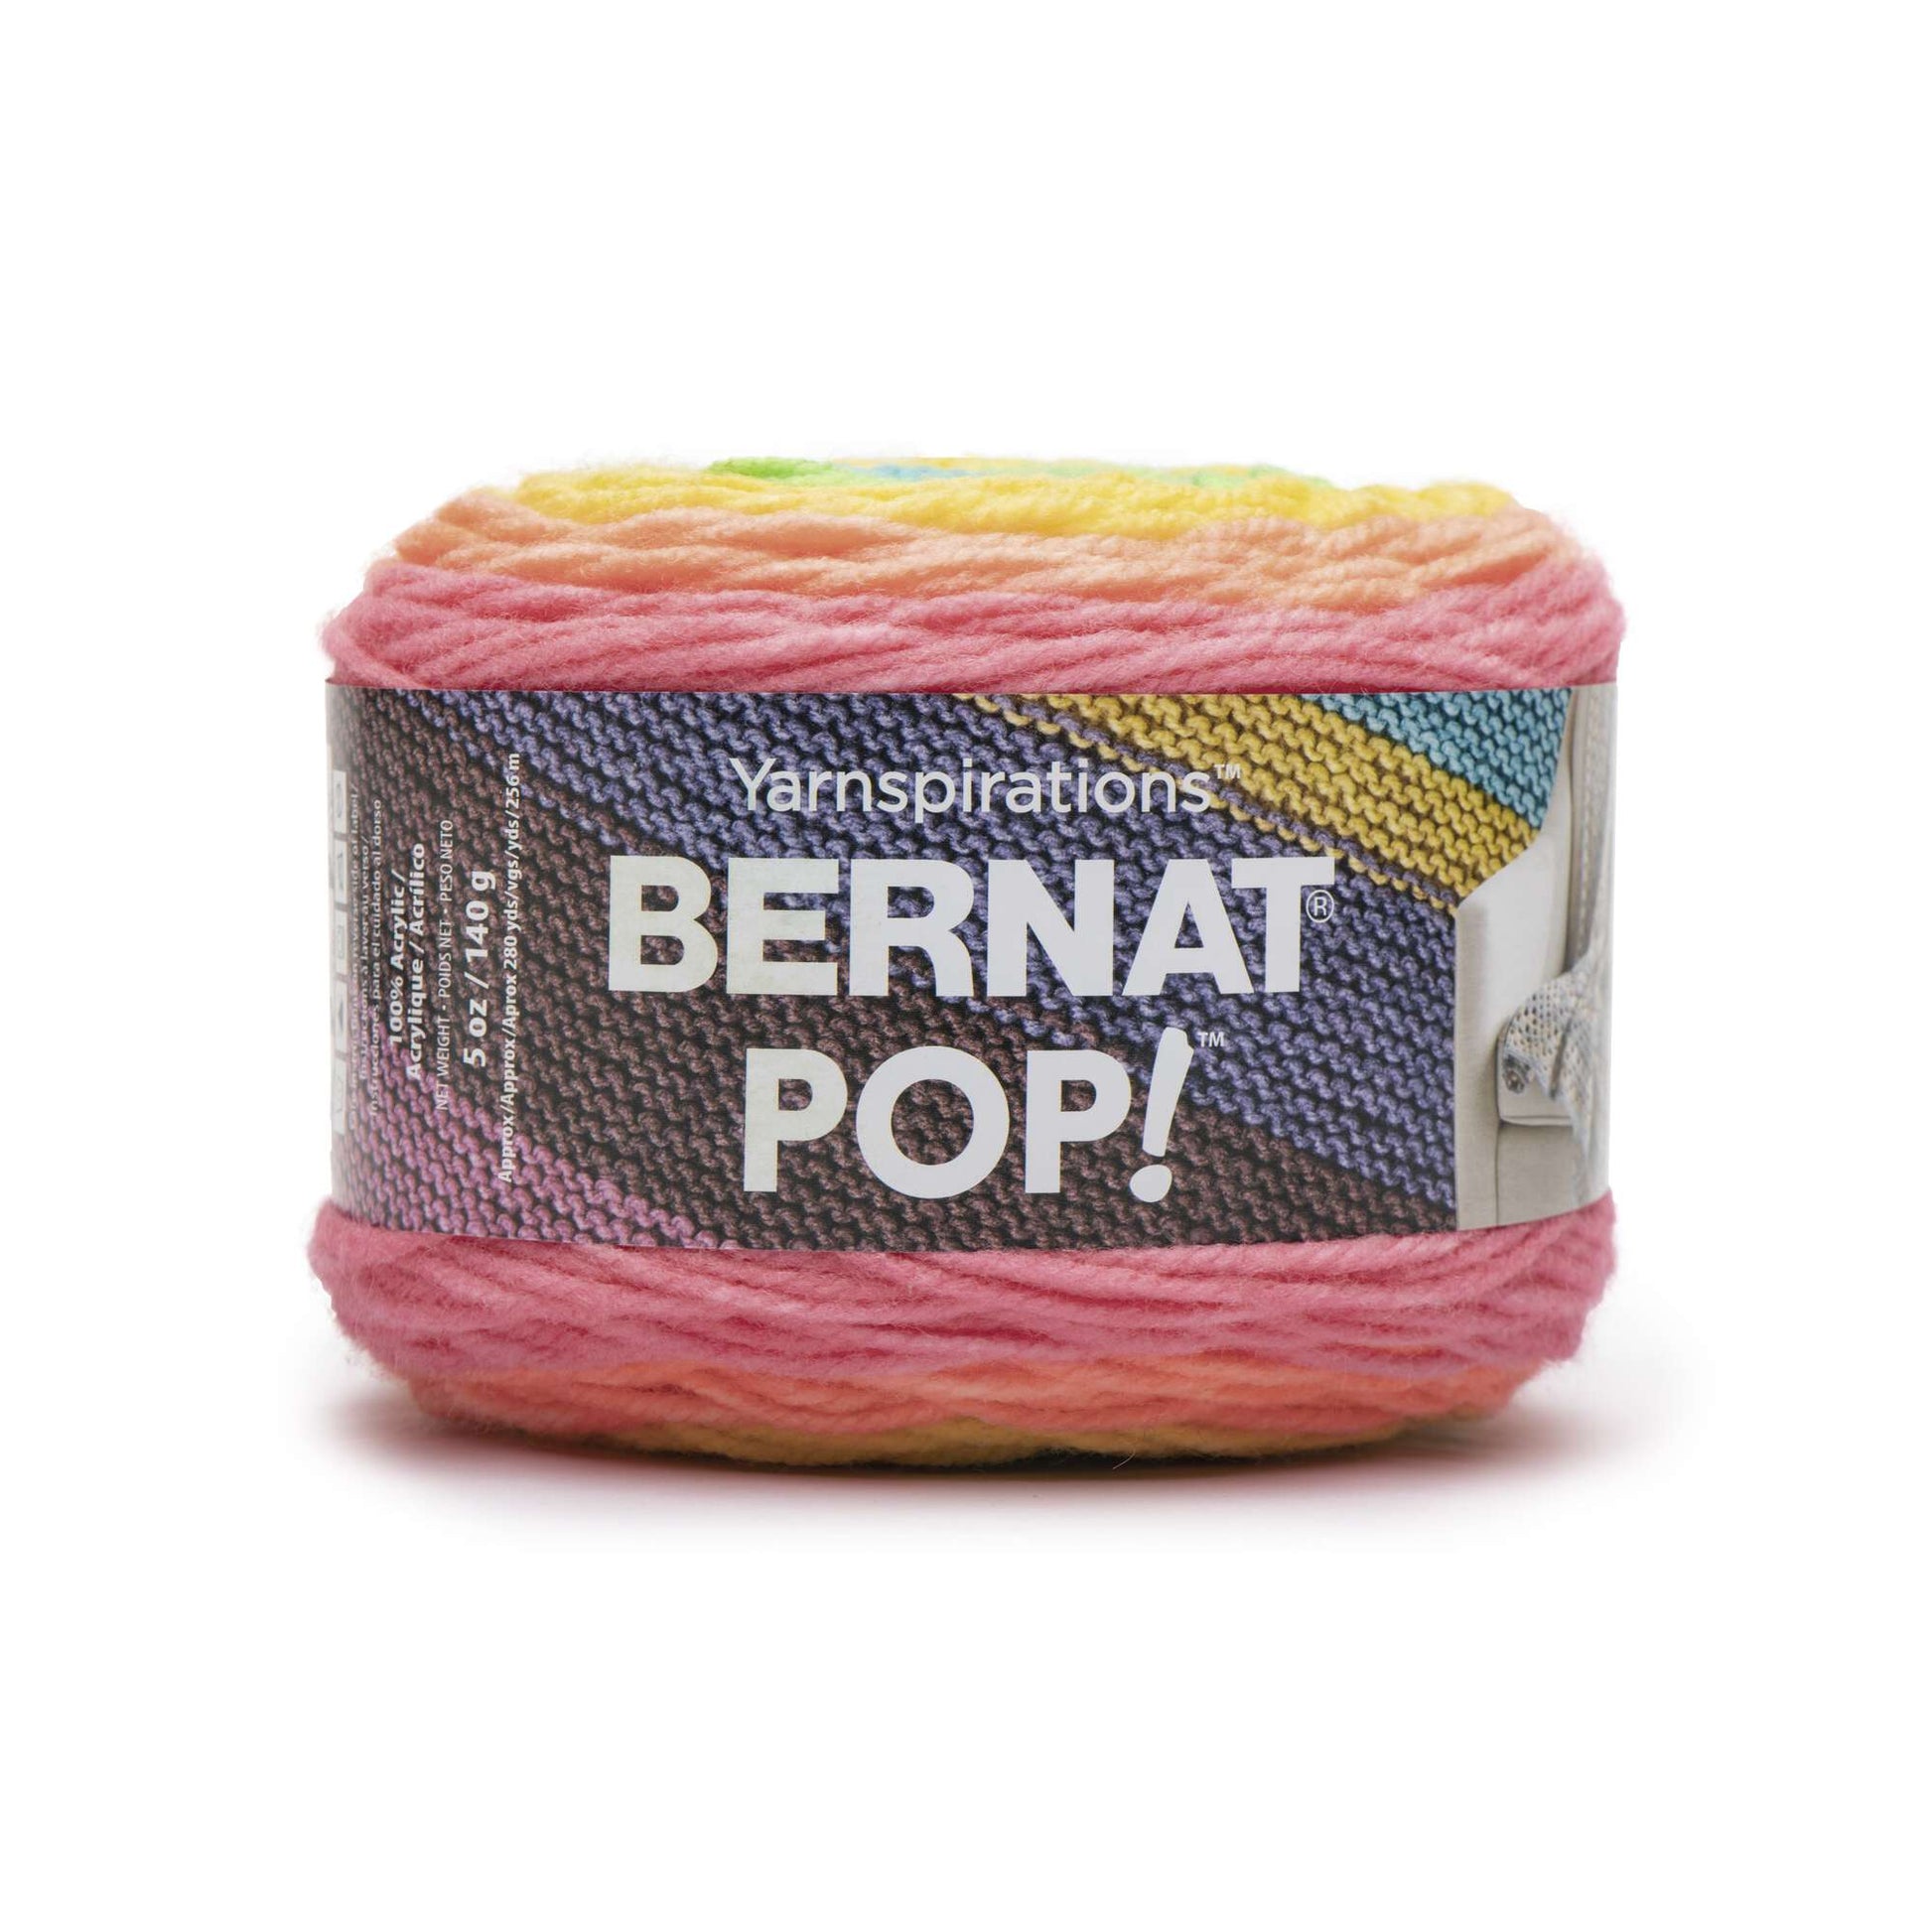 Bernat Pop! Yarn - Clearance Shades Psychedelic